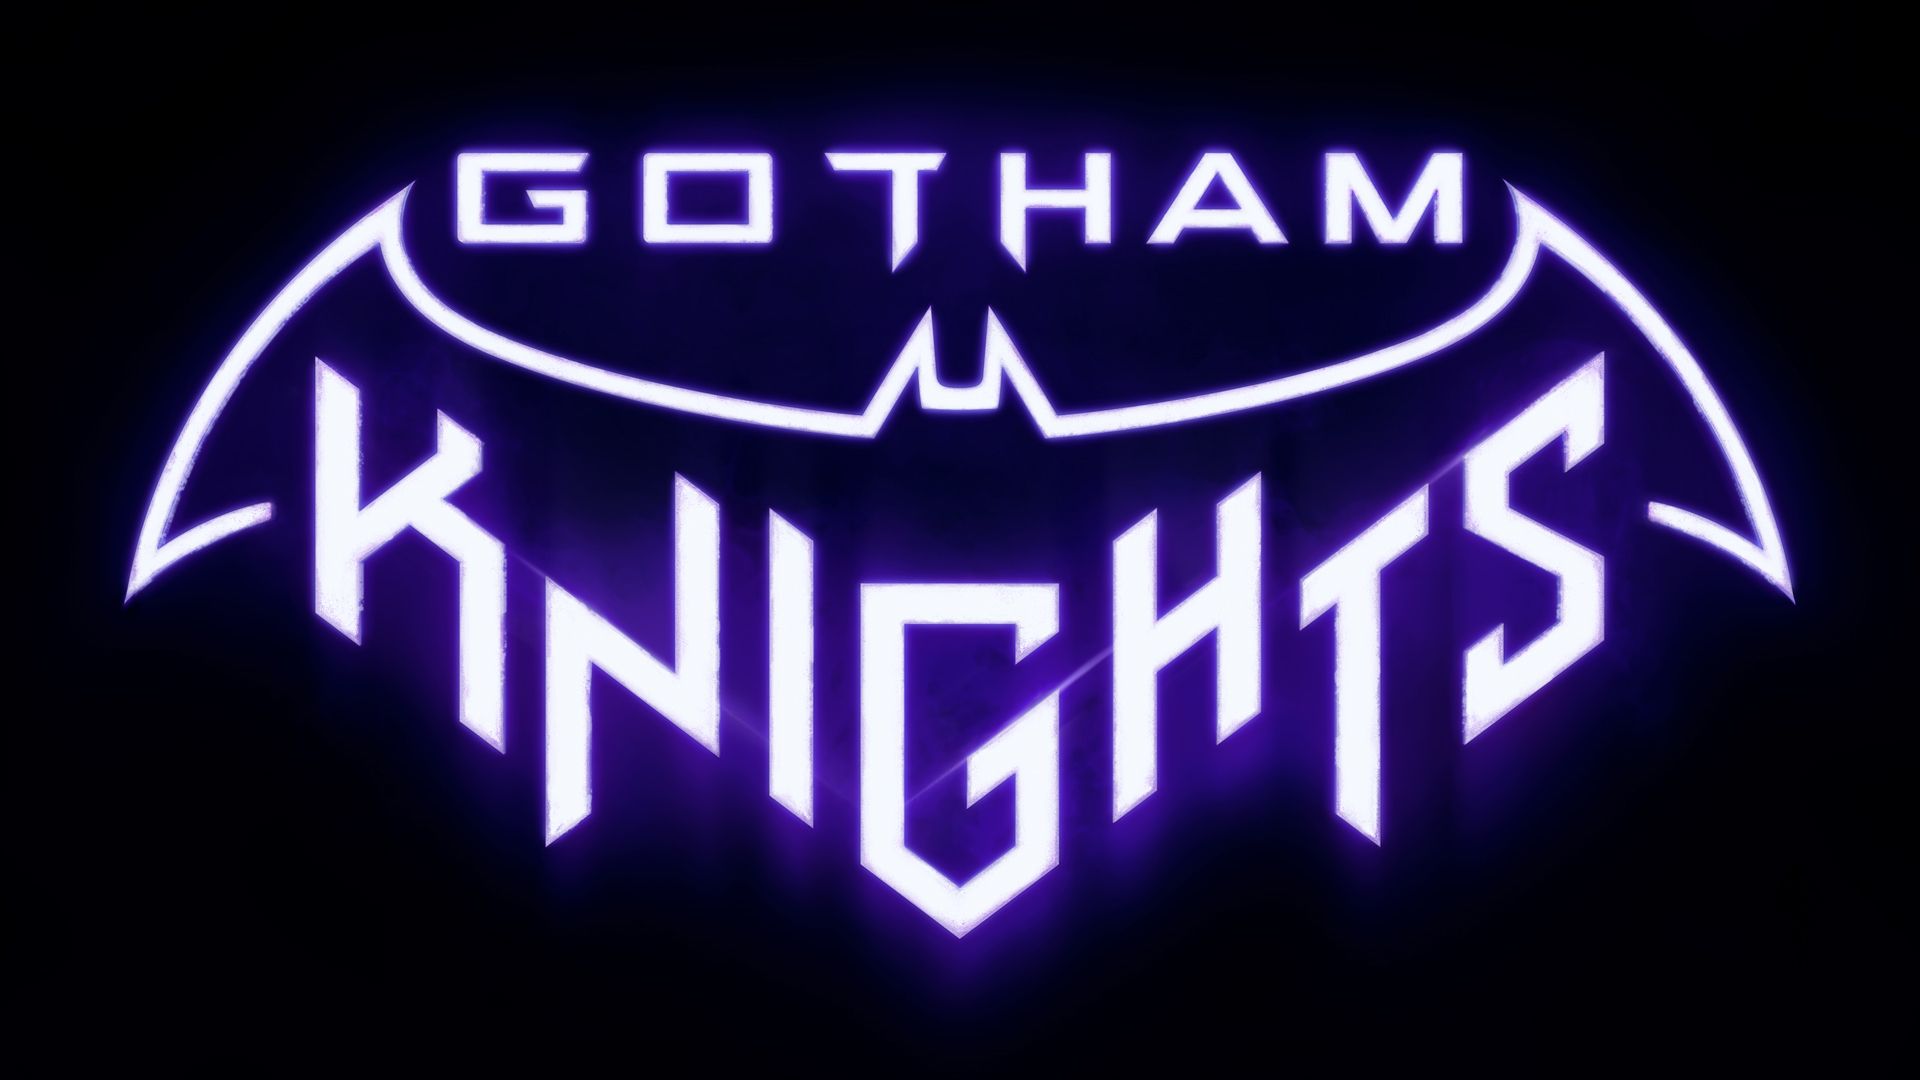 batman gotham knights game download free